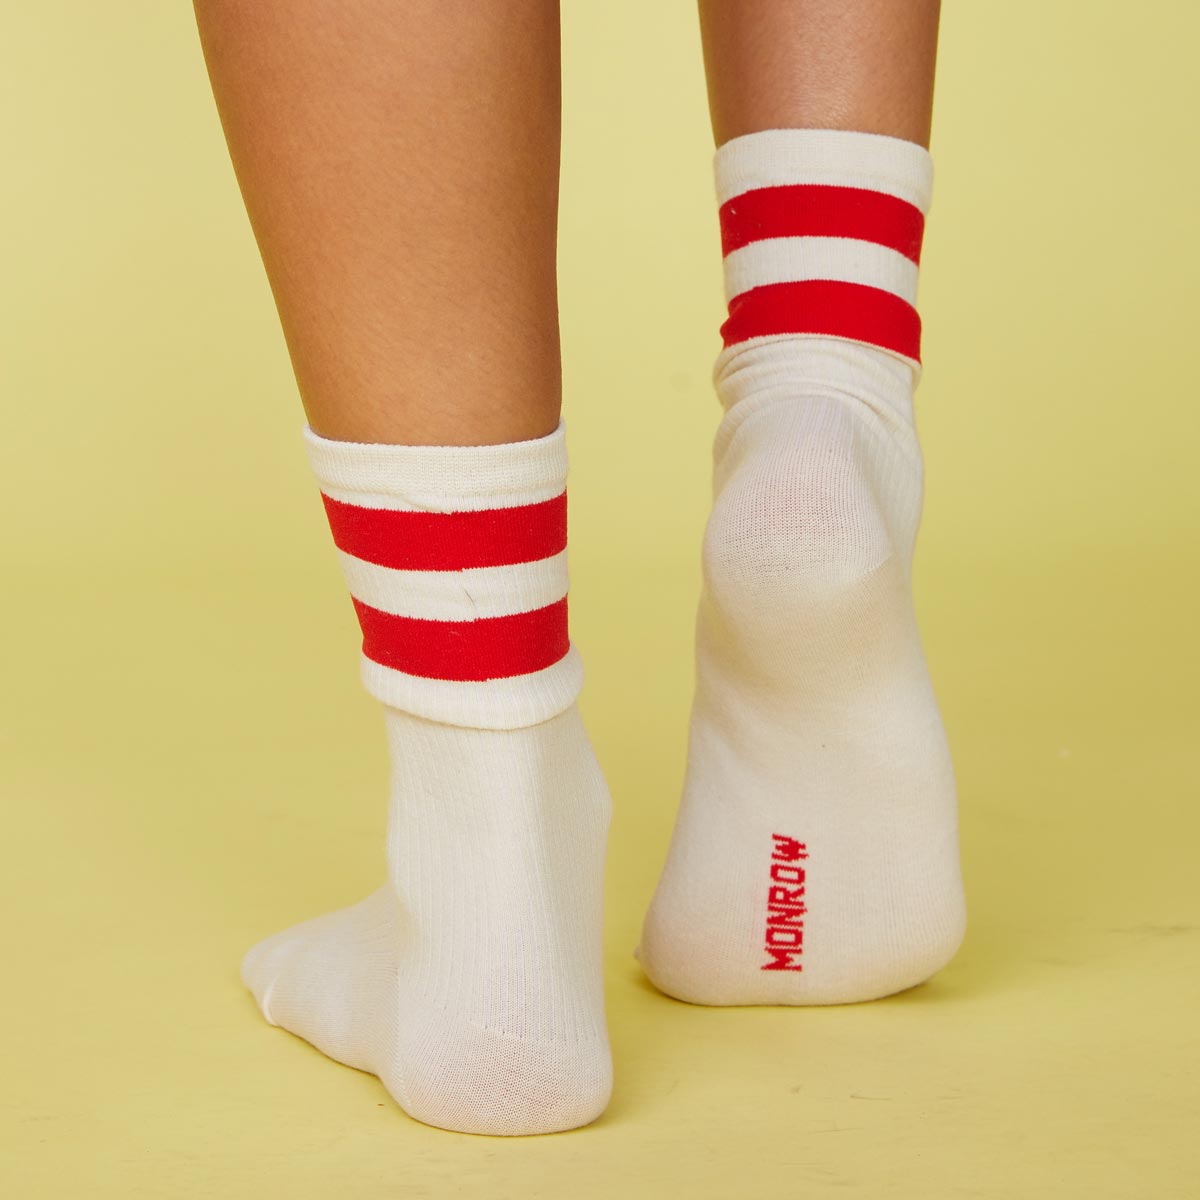 Back view of models feet wearing the stripe socks in blood red.